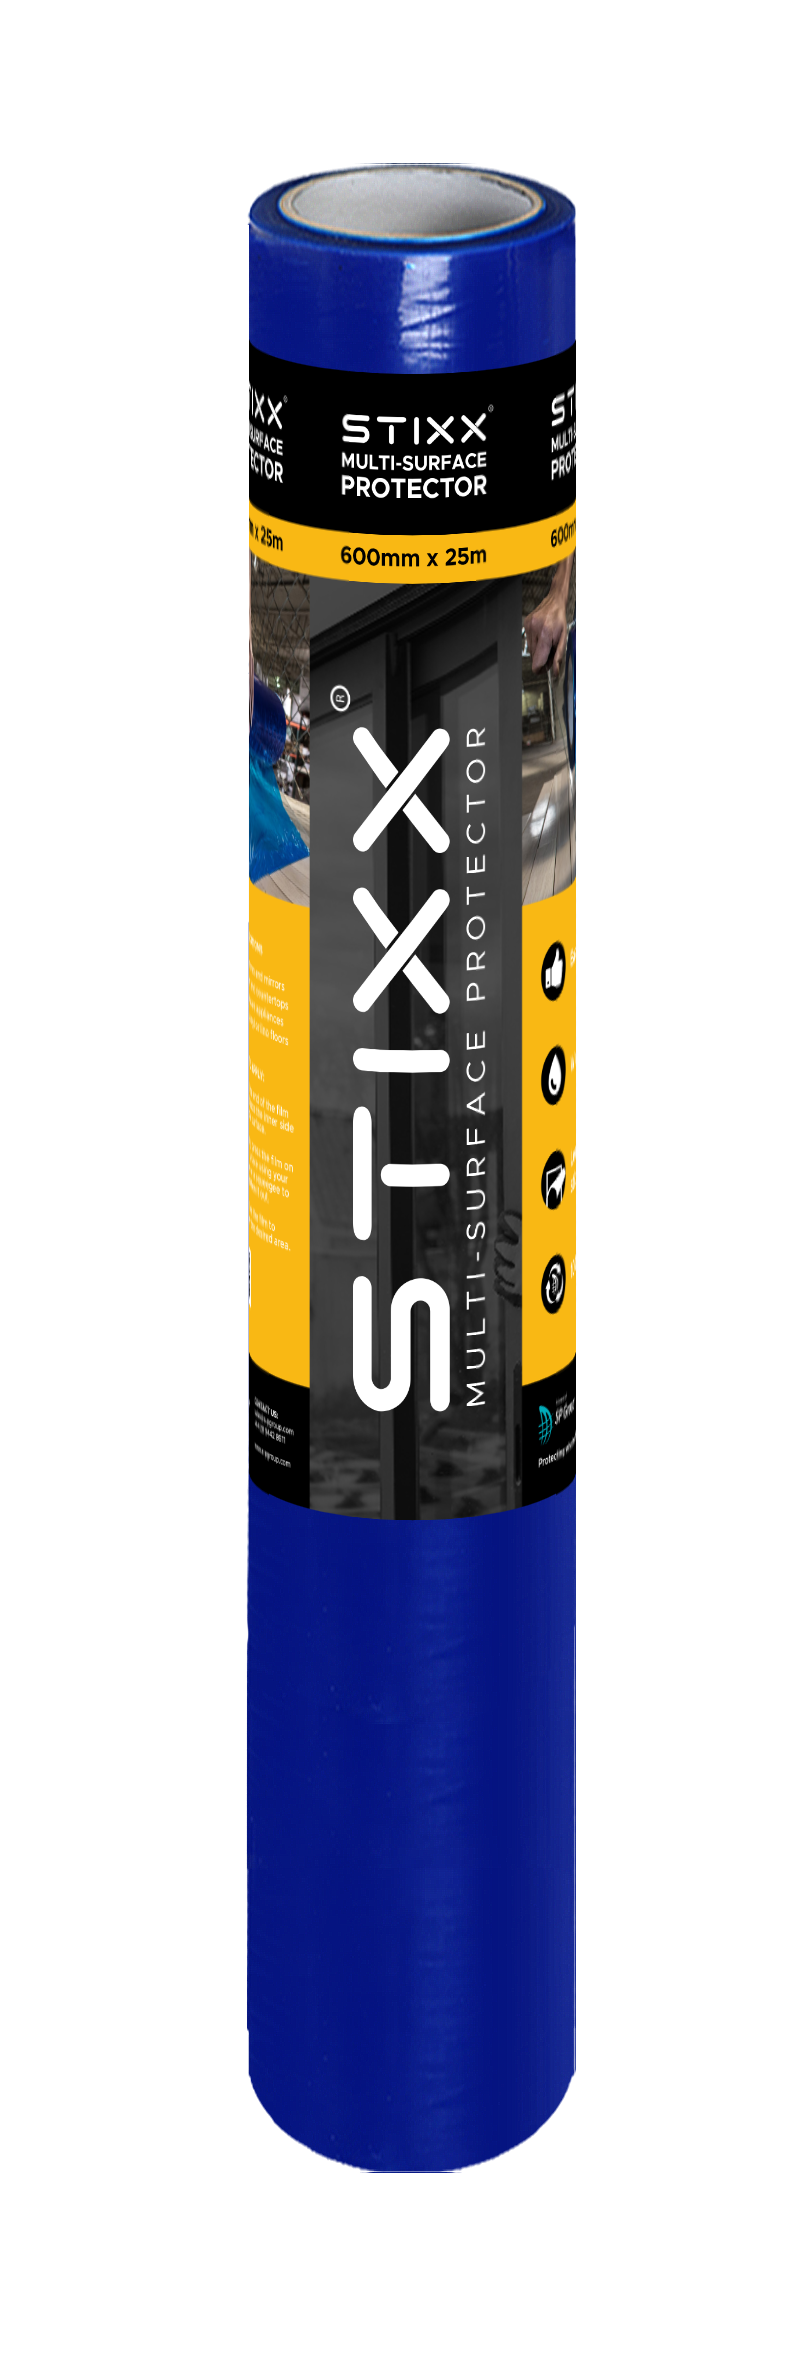 STIXX Protection Film - Multi-Surface